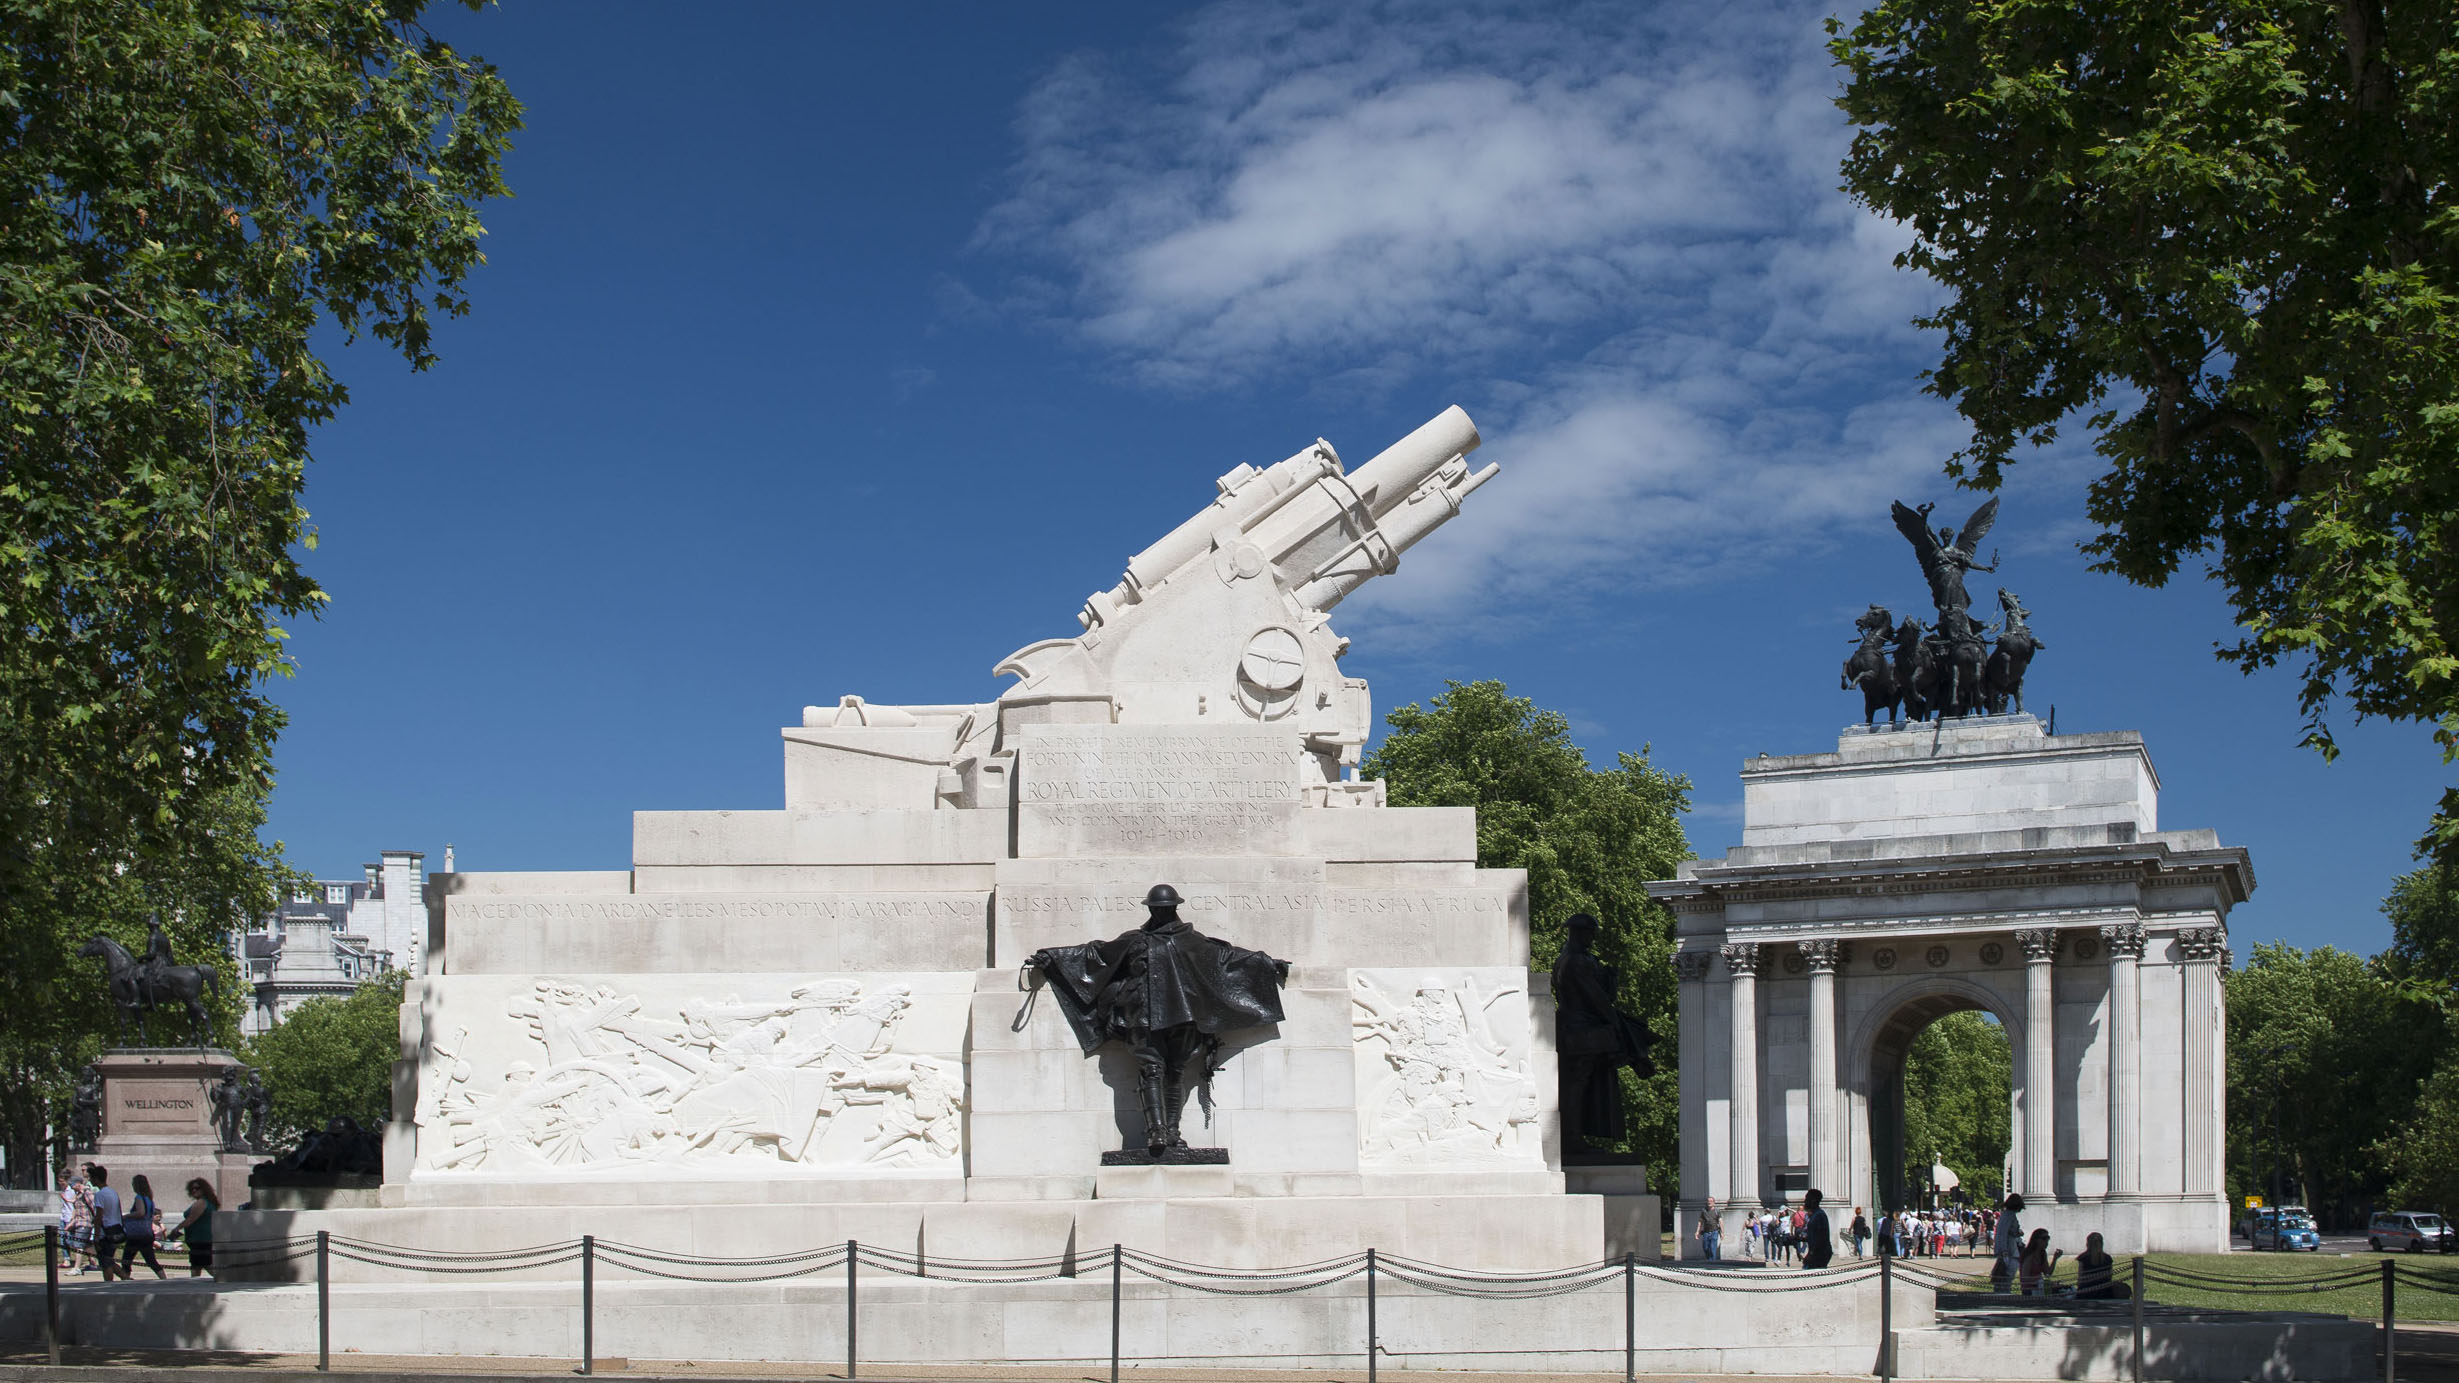 Royal Artillery Memorial against a blue sky, Hyde Park Corner, London.